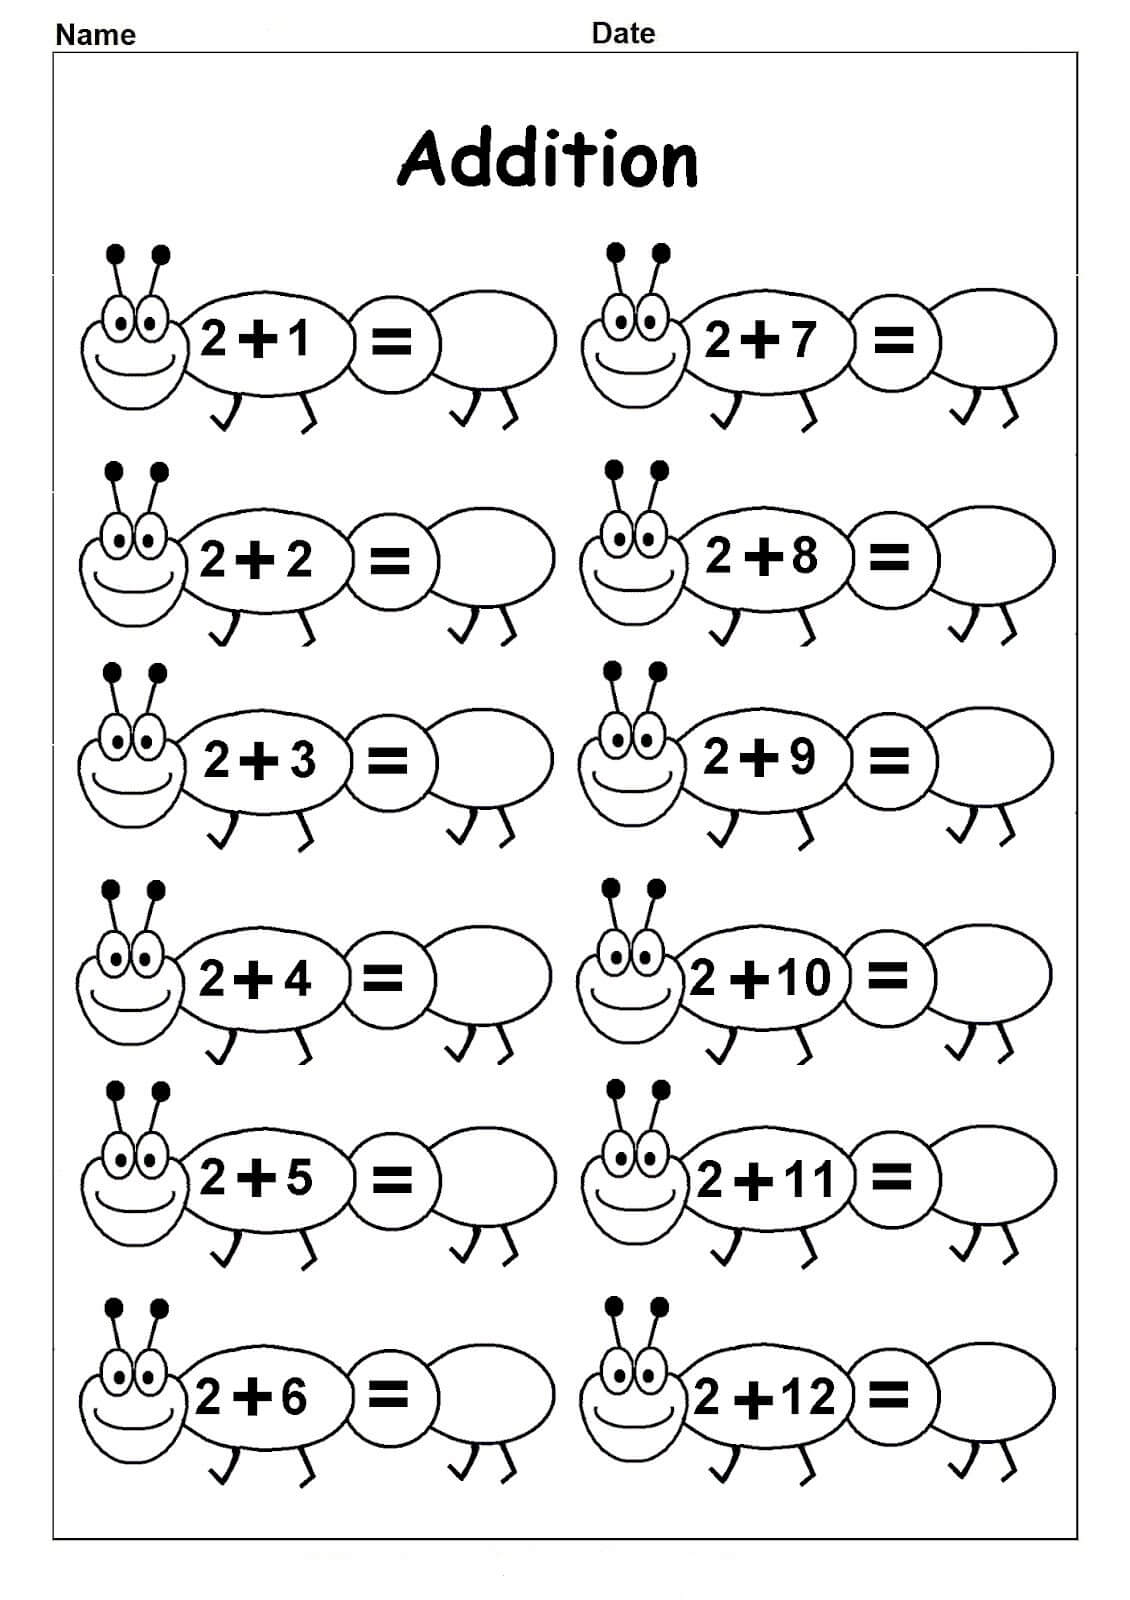 kindergarten-math-worksheets-pdf-to-printable-15-kindergarten-math-worksheets-pdf-files-to